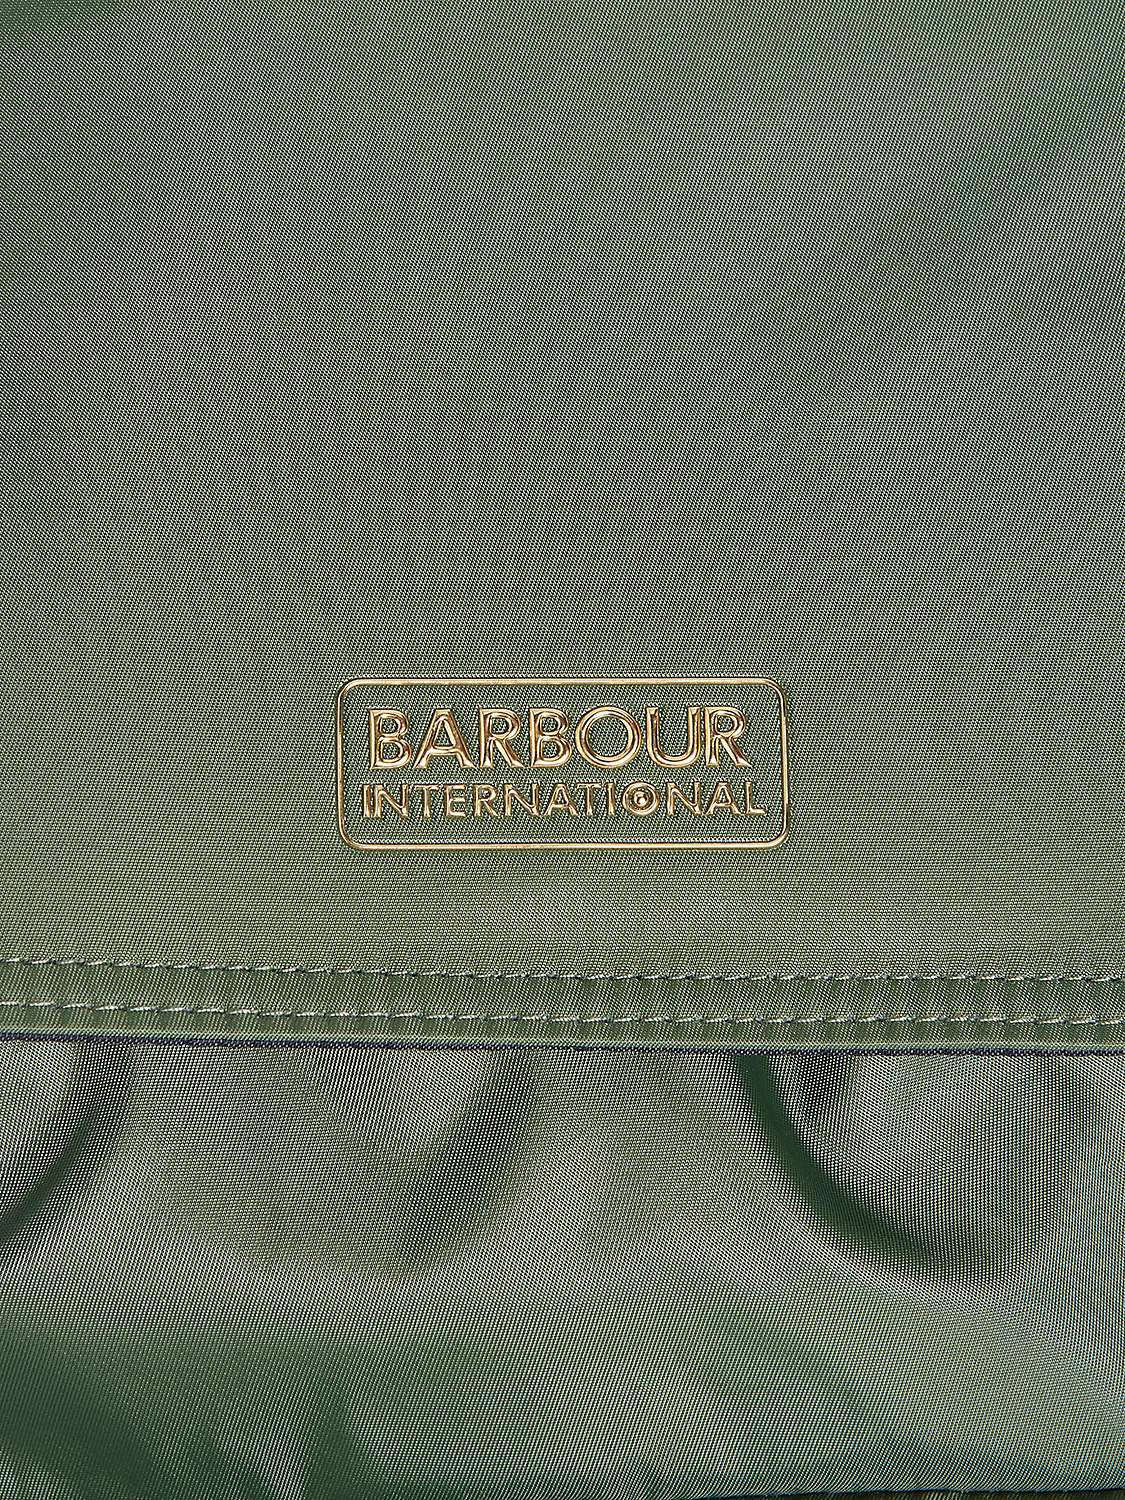 Buy Barbour International Qualify Backpack, Green Online at johnlewis.com